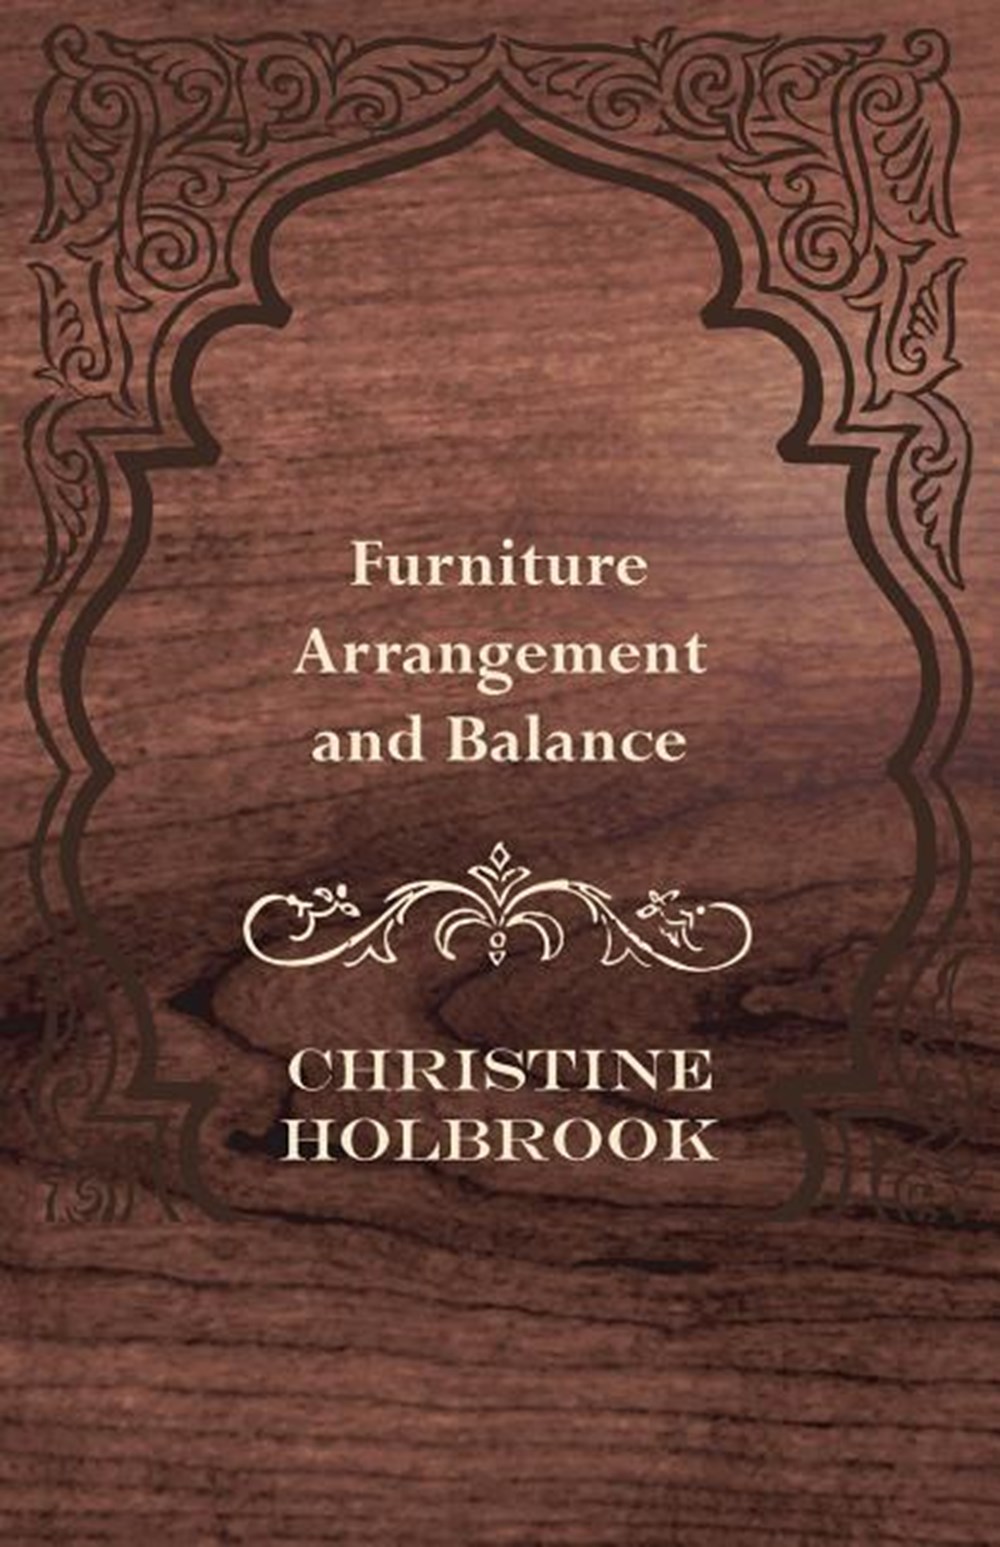 Furniture Arrangement and Balance